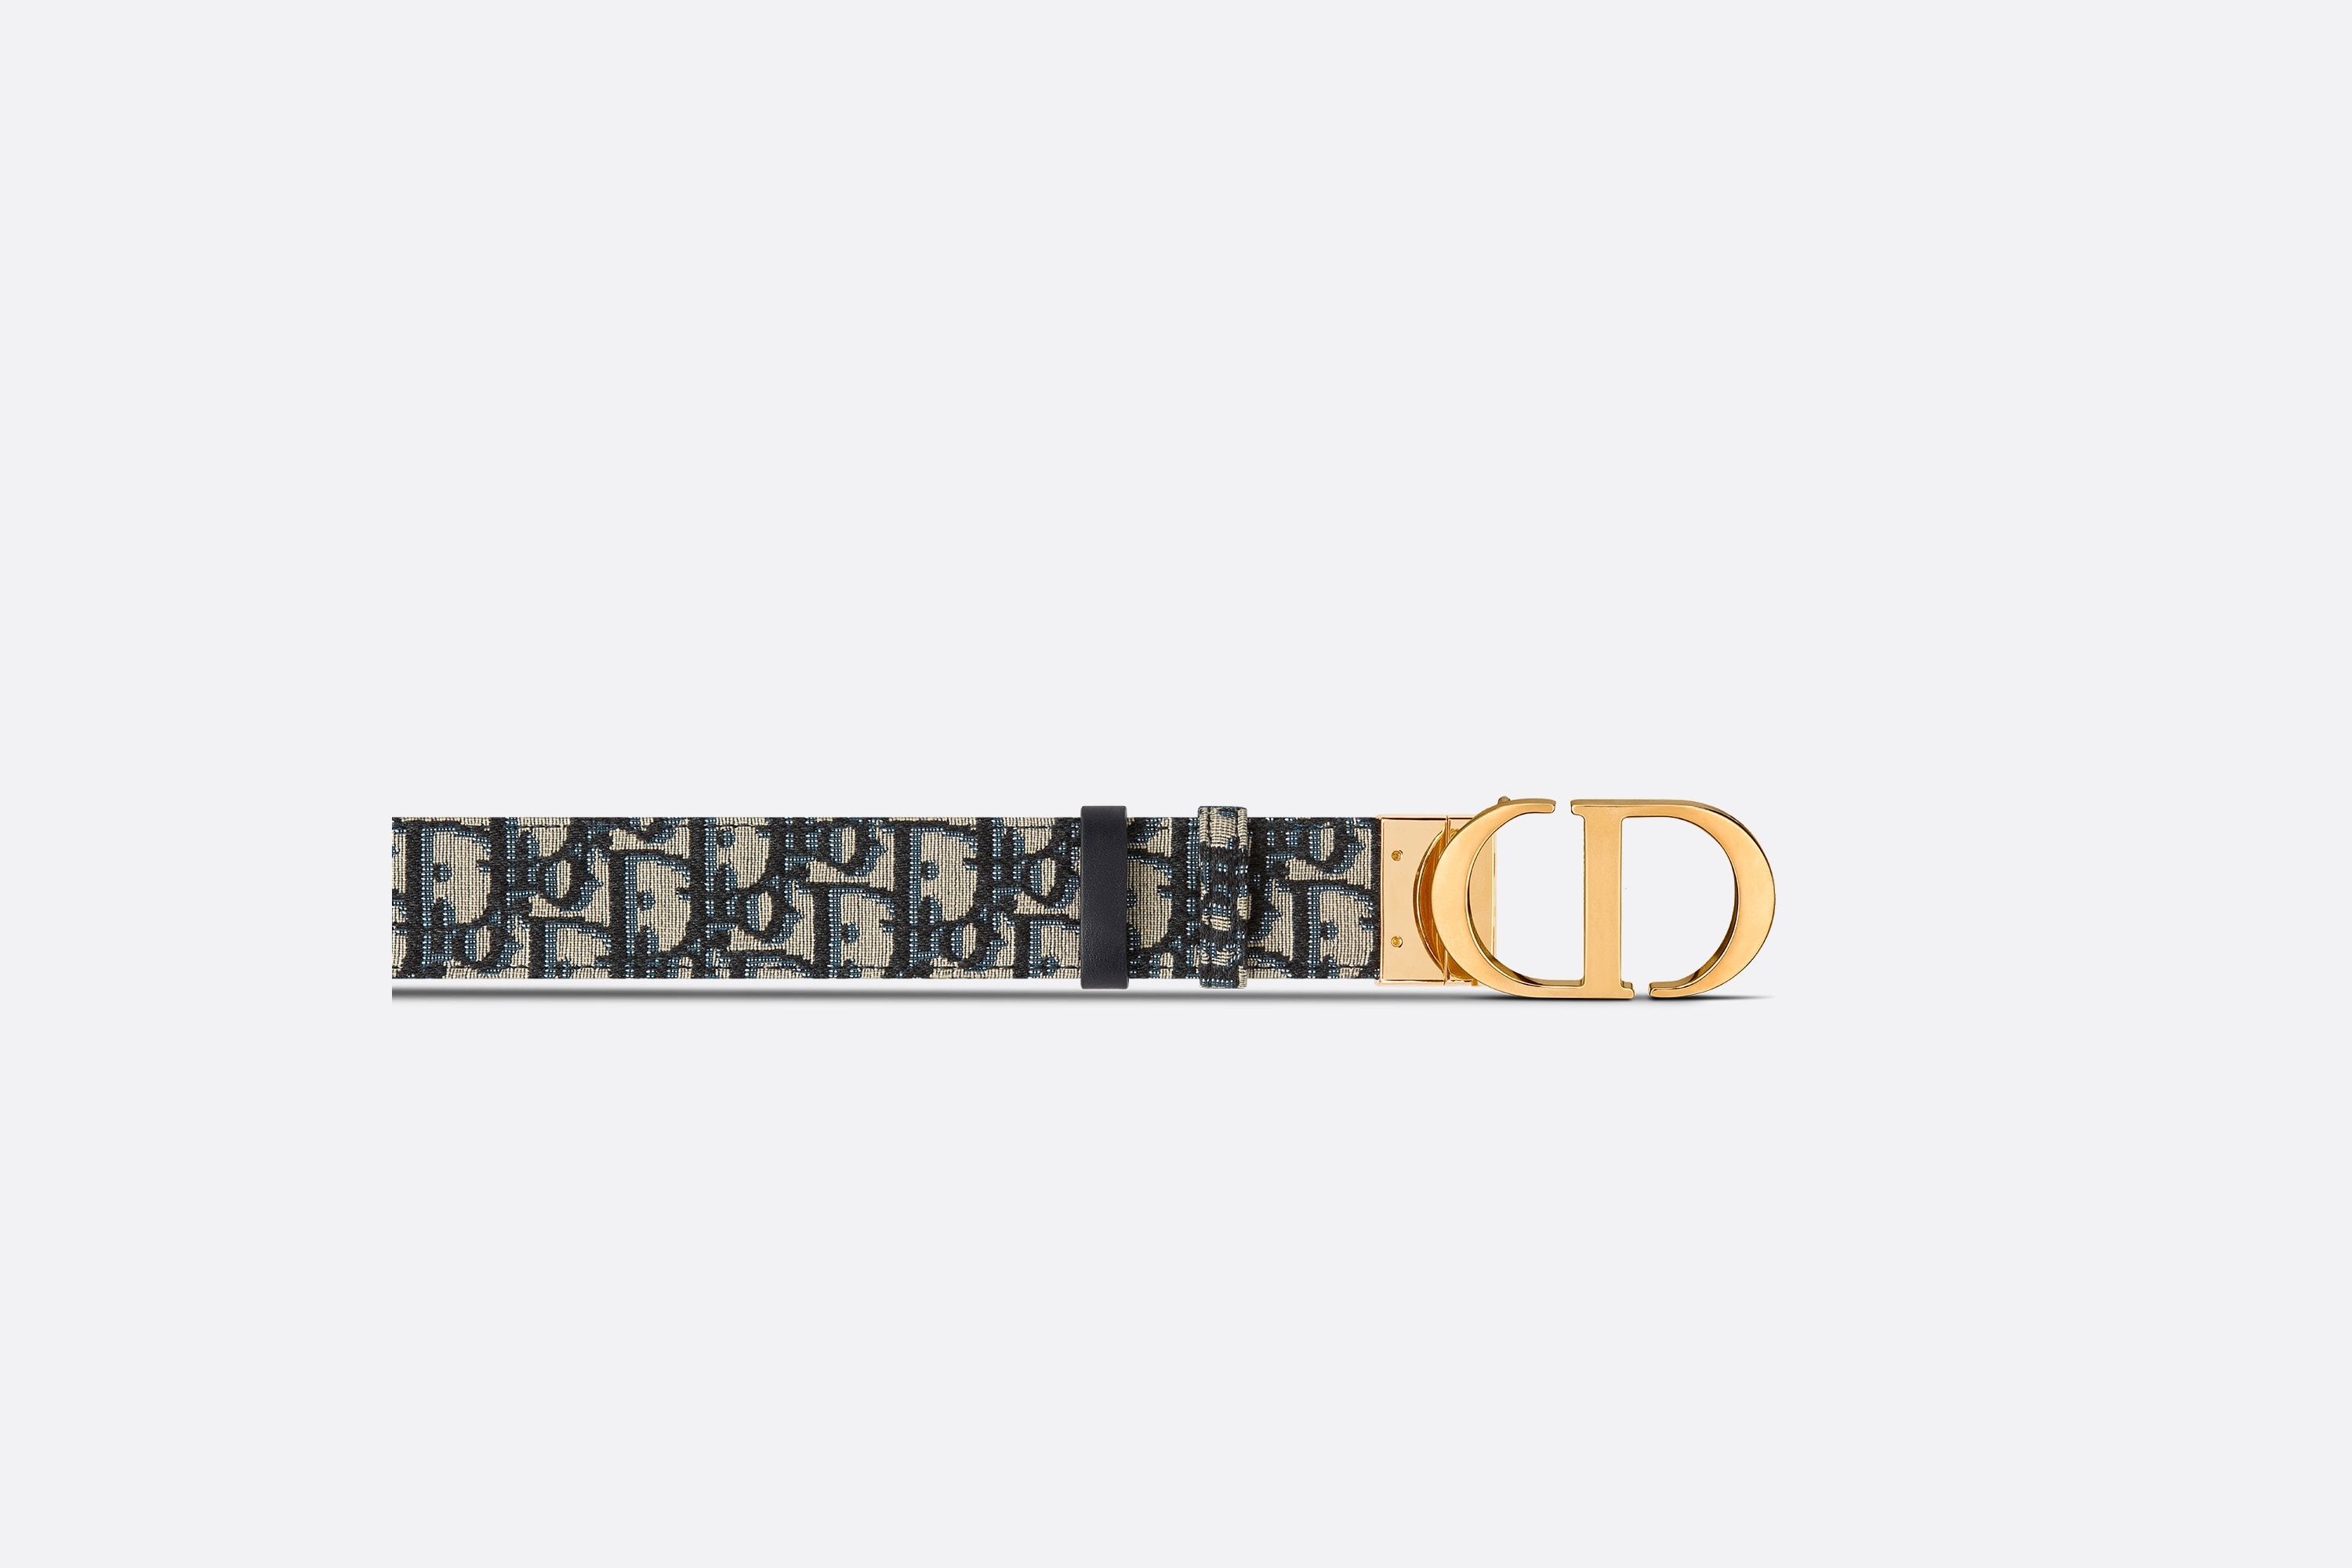 CD Icon Reversible Belt Strap Black Smooth Calfskin, 35 MM